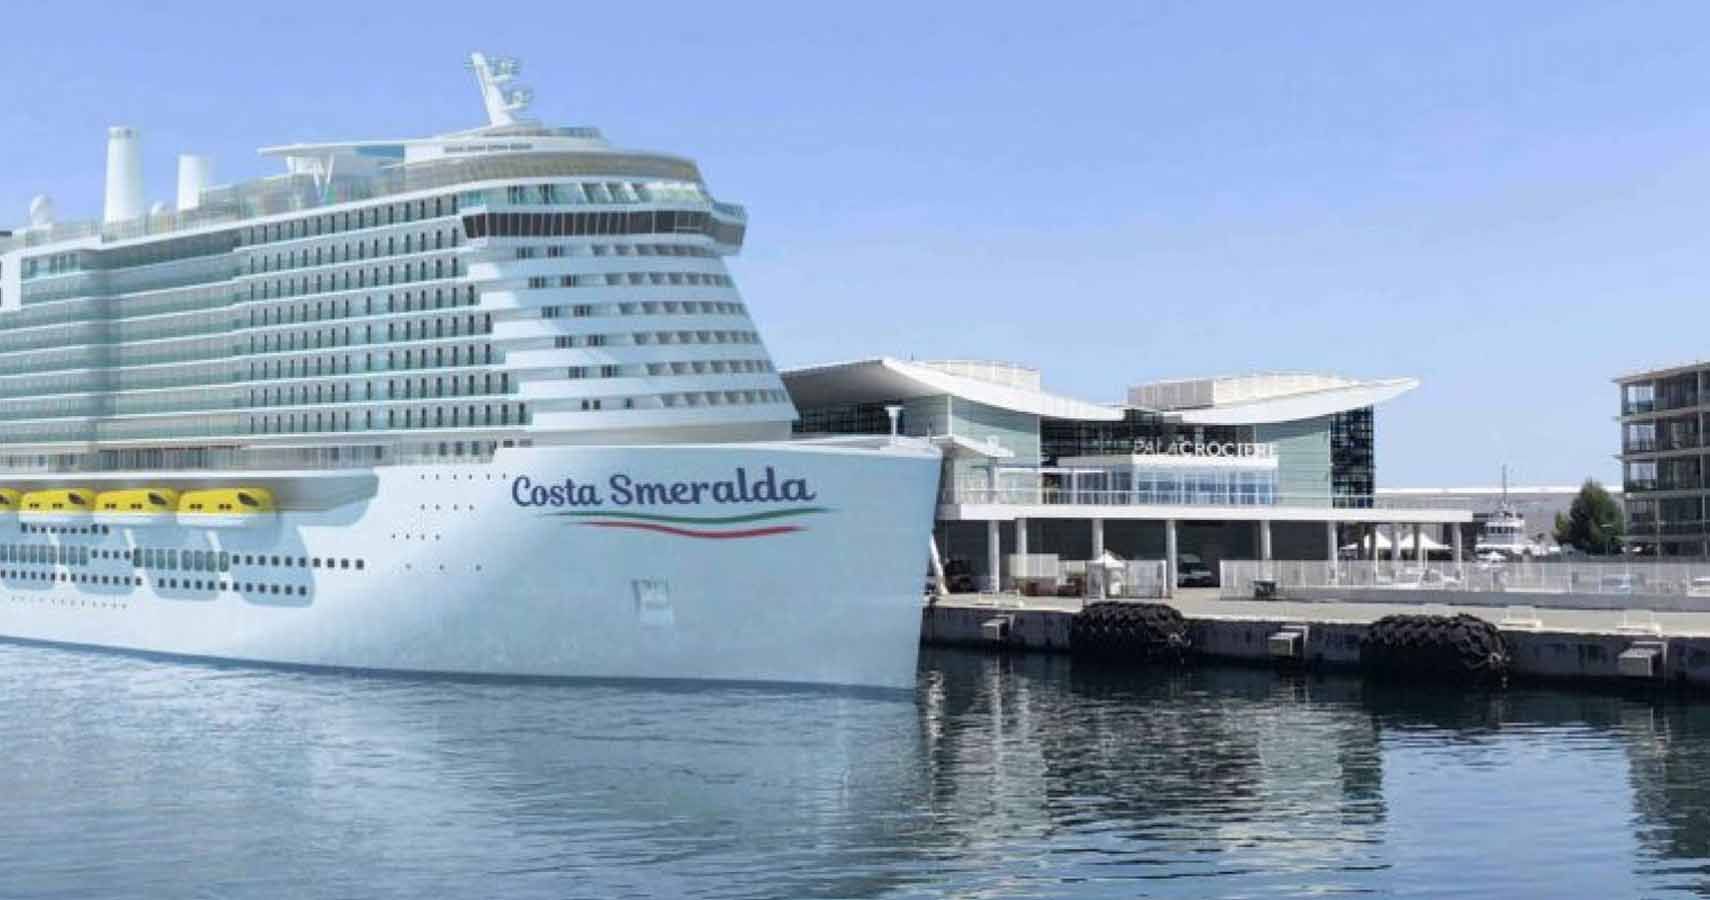 Ccosta Smeralda cruise ship